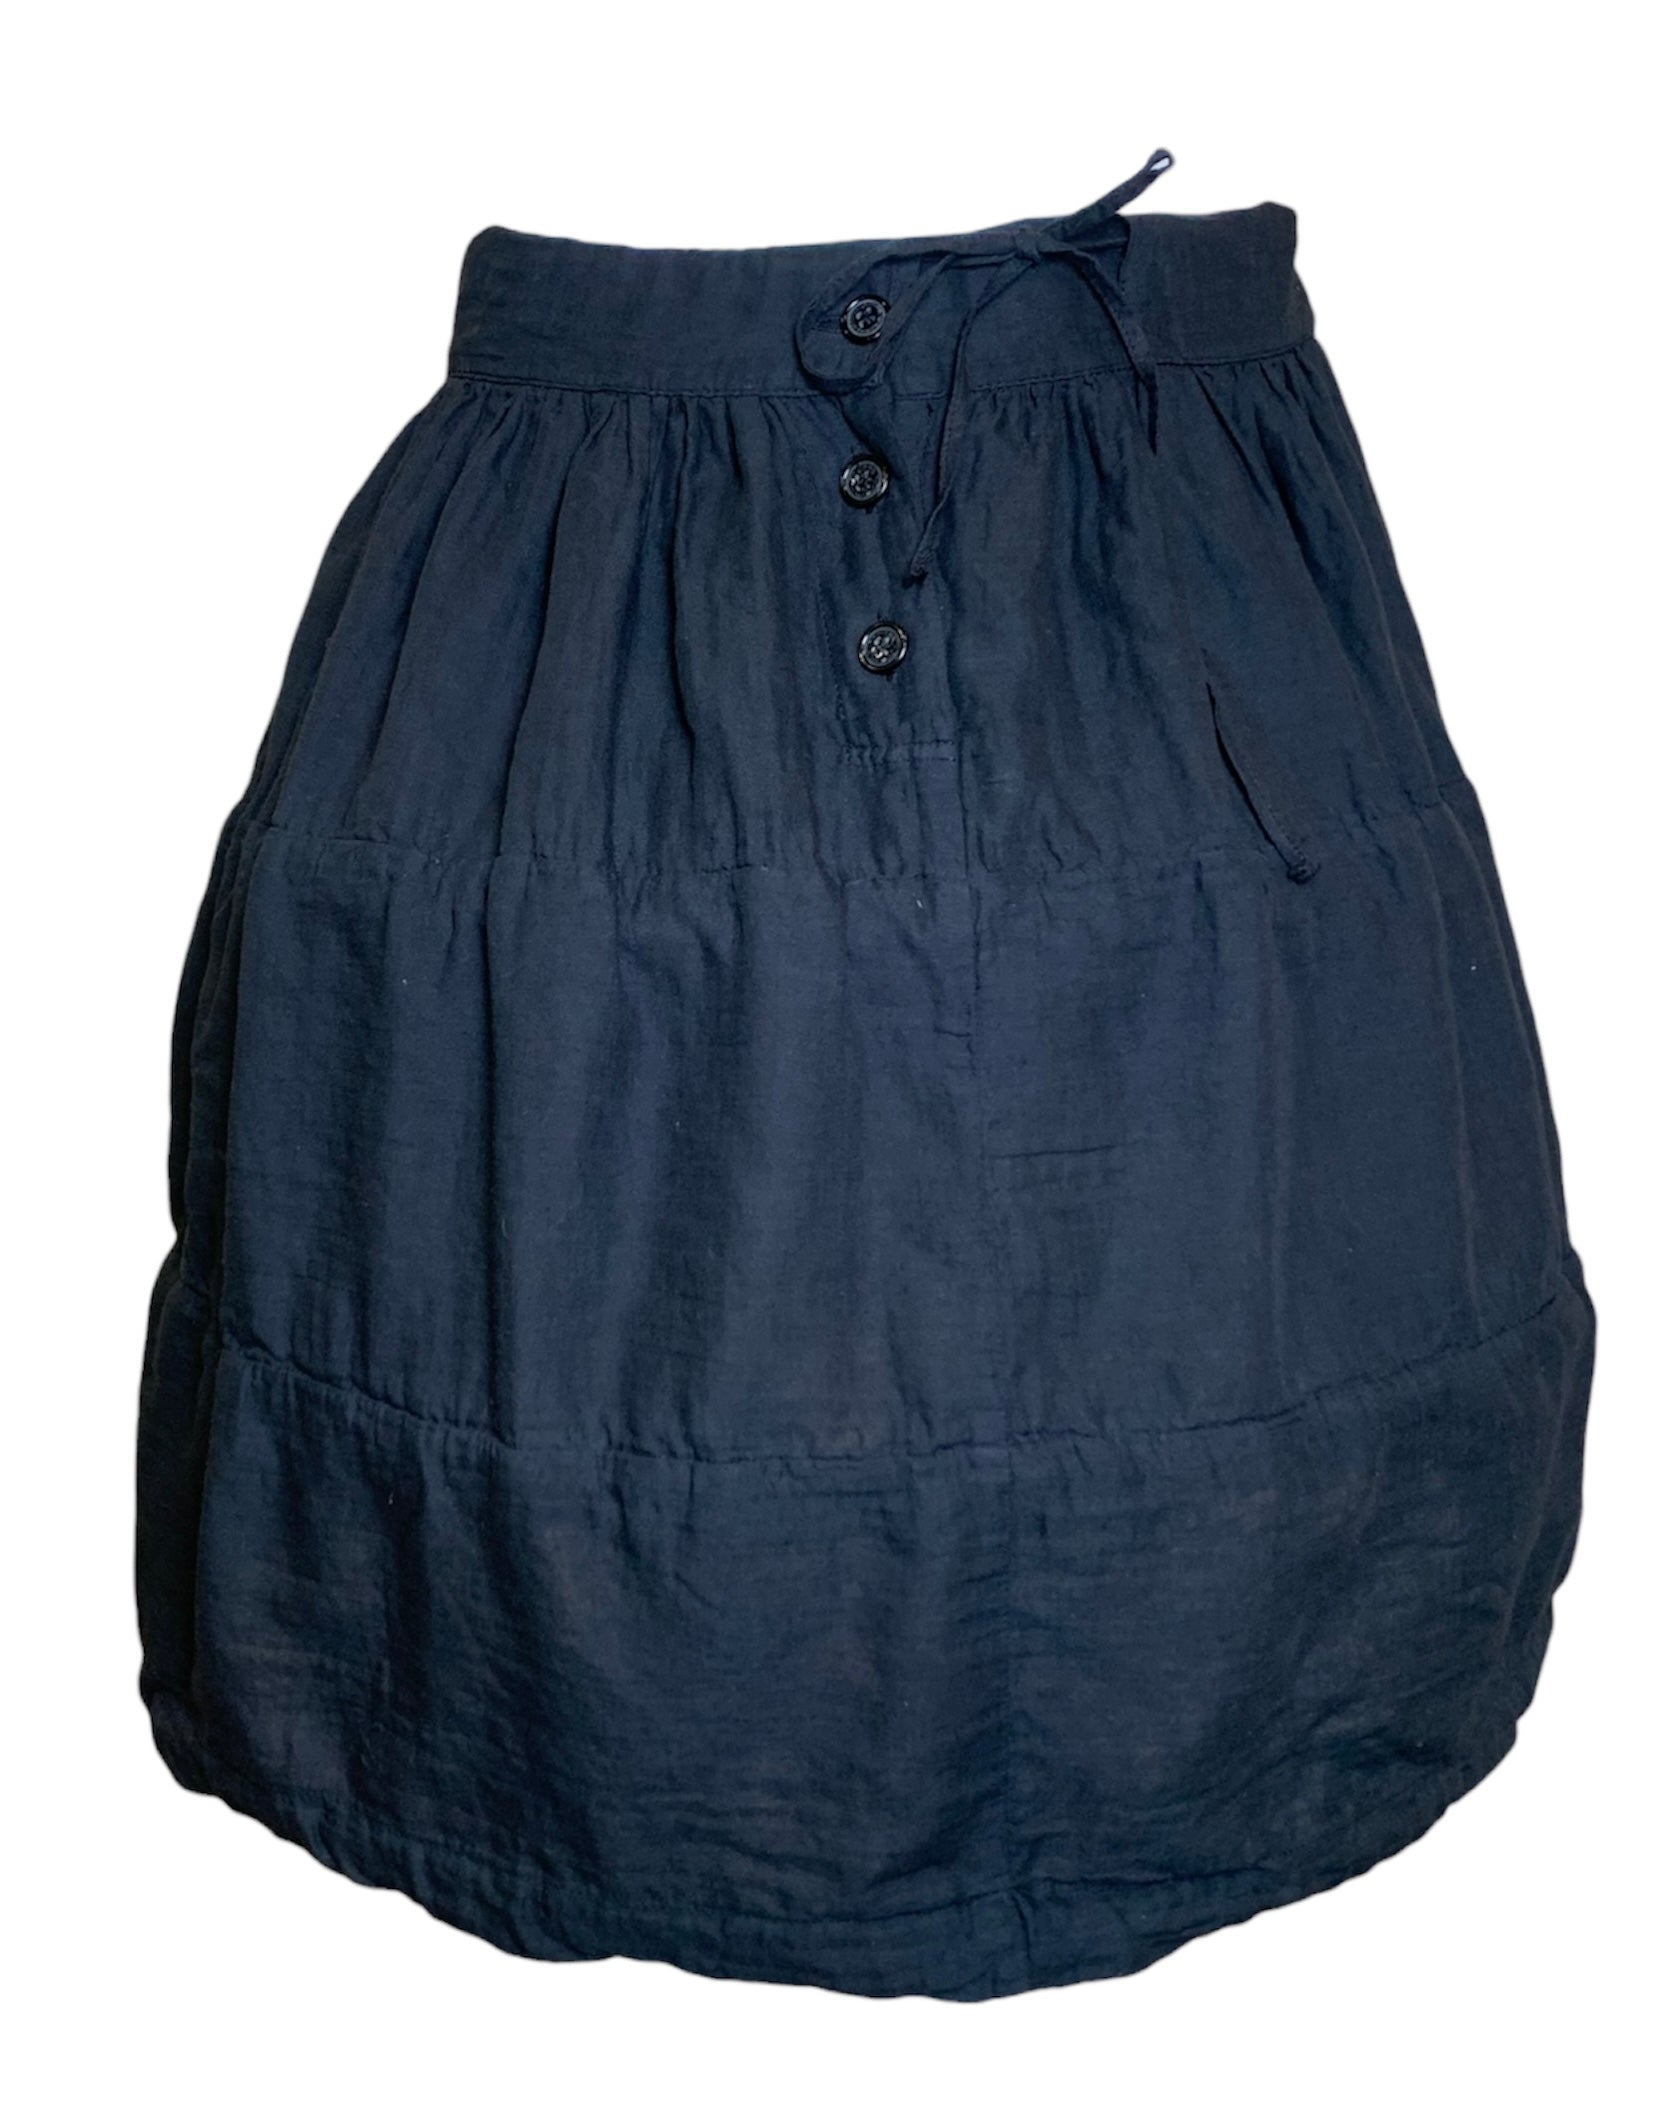 Vivienne Westwood Anglomania Black Cotton Mini Crini Skirt 3/5